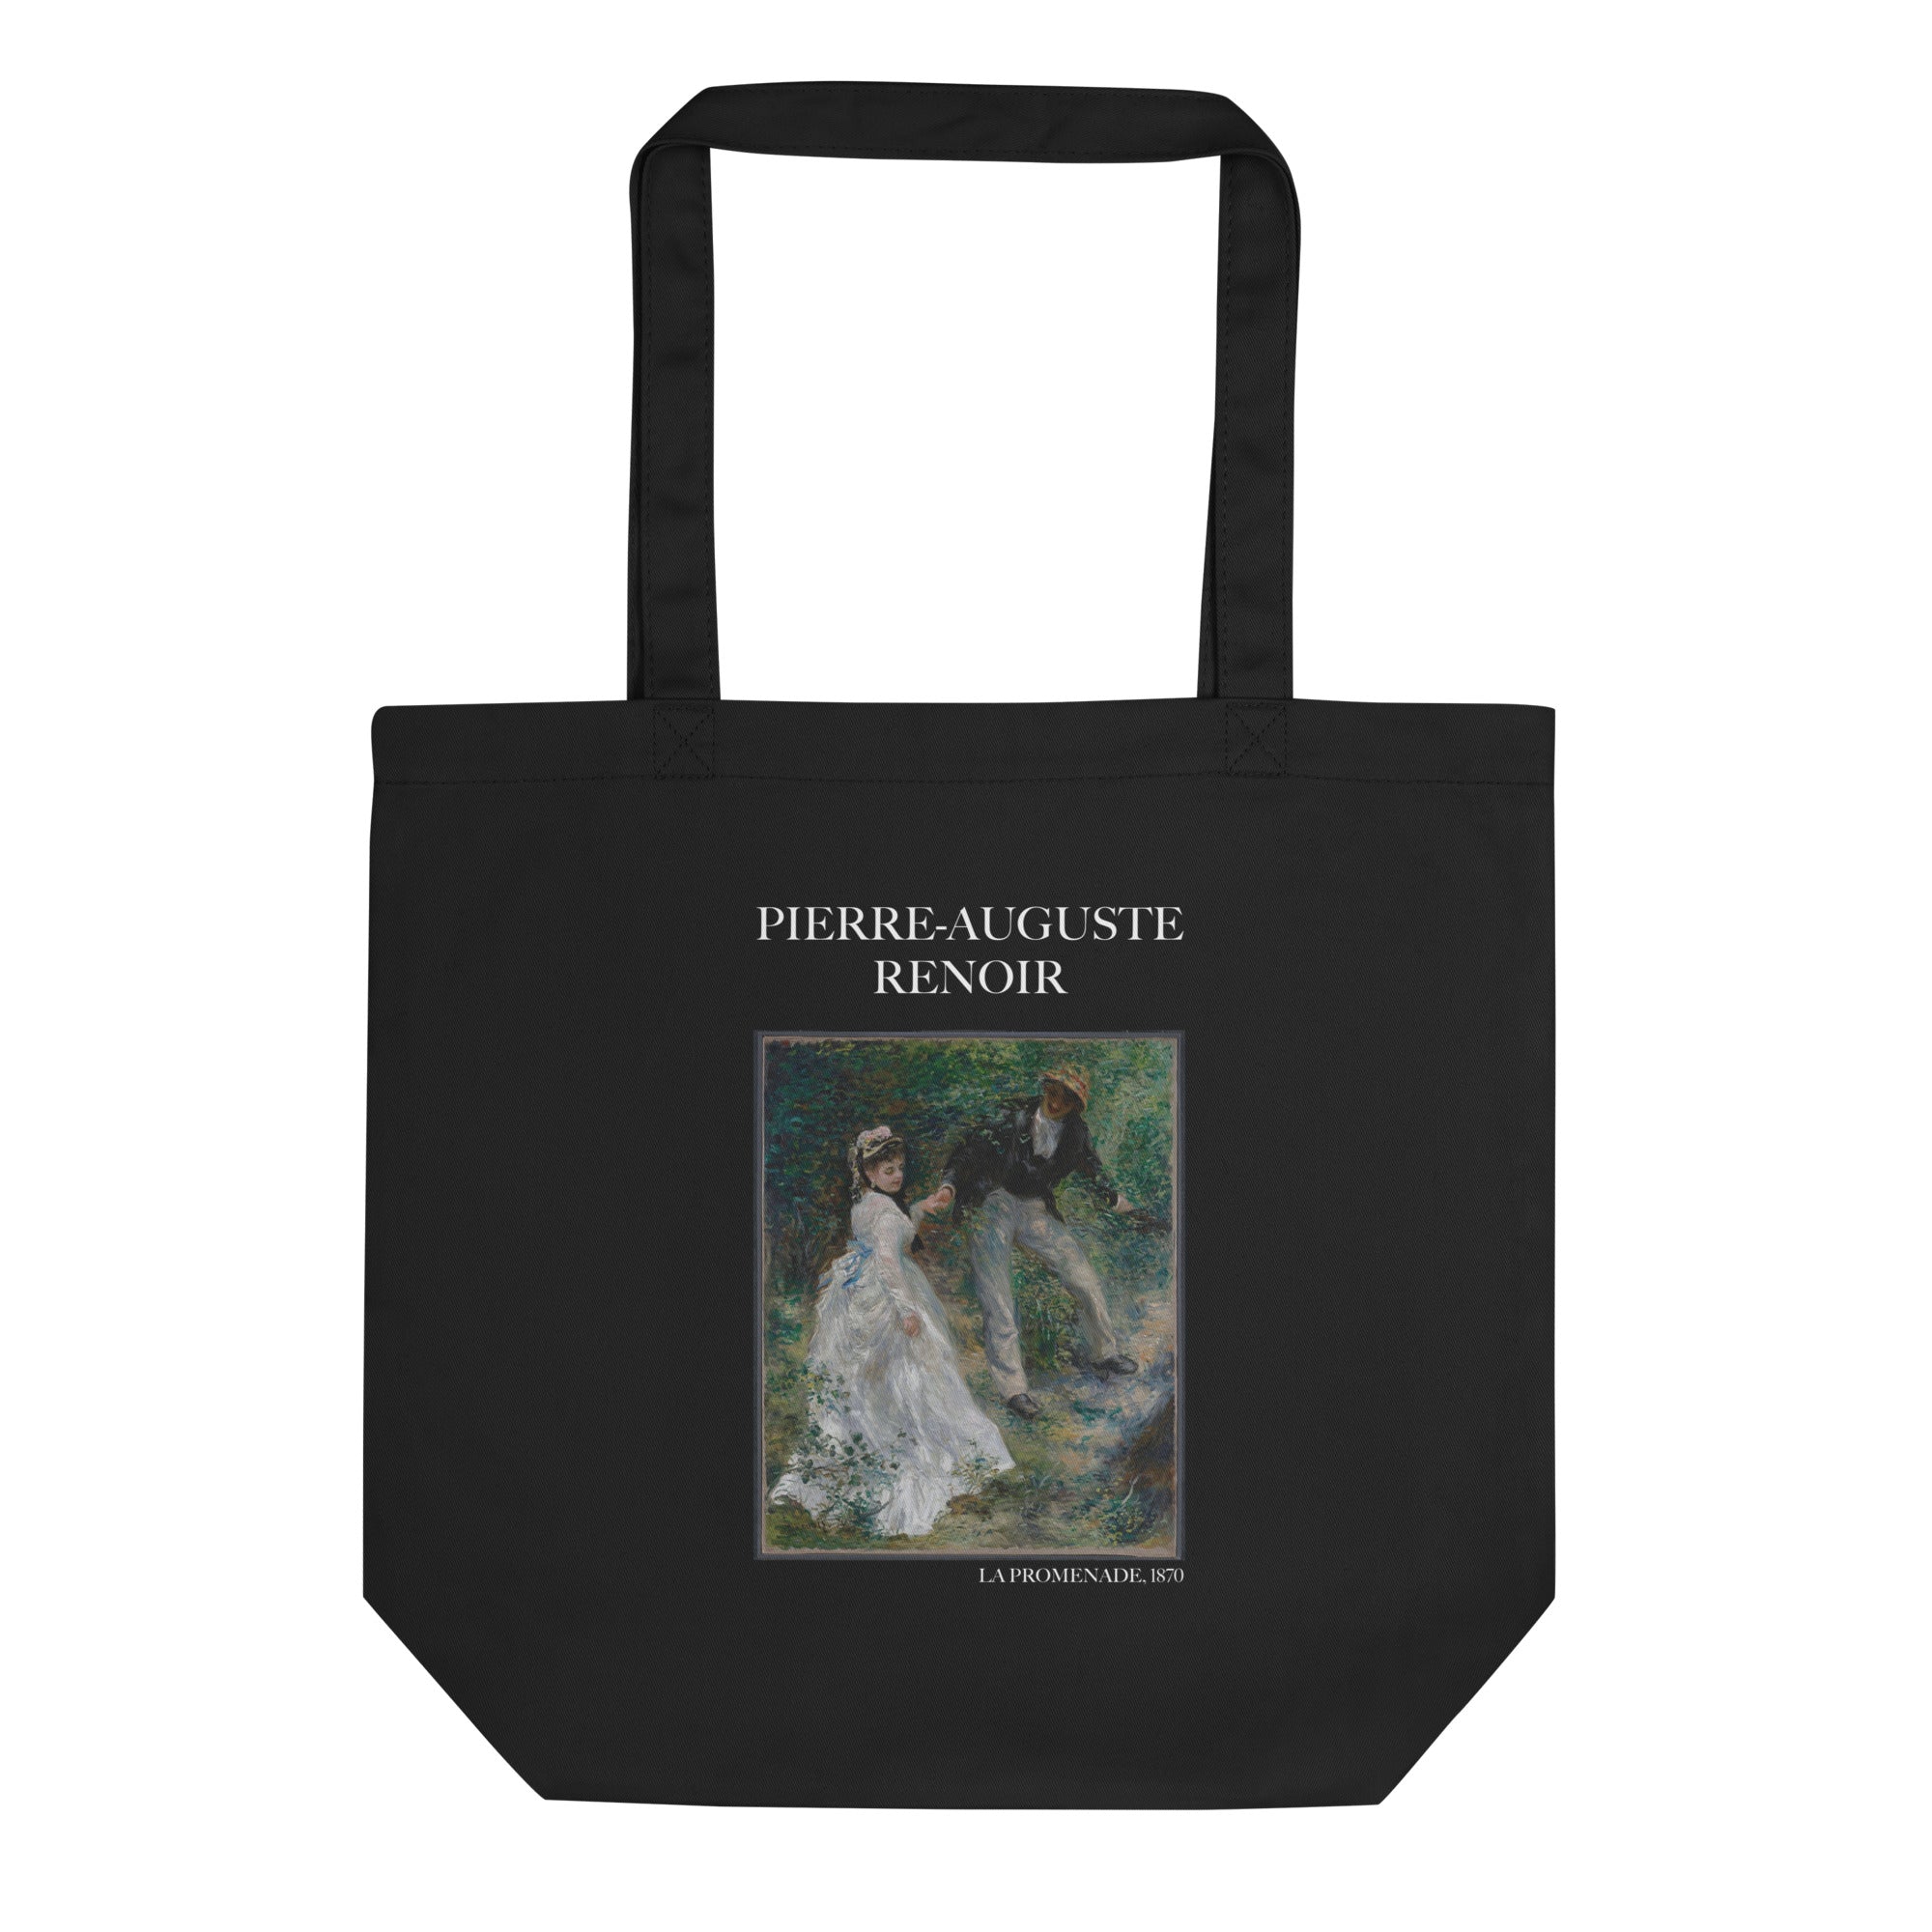 Pierre-Auguste Renoir 'La Promenade' Famous Painting Totebag | Eco Friendly Art Tote Bag